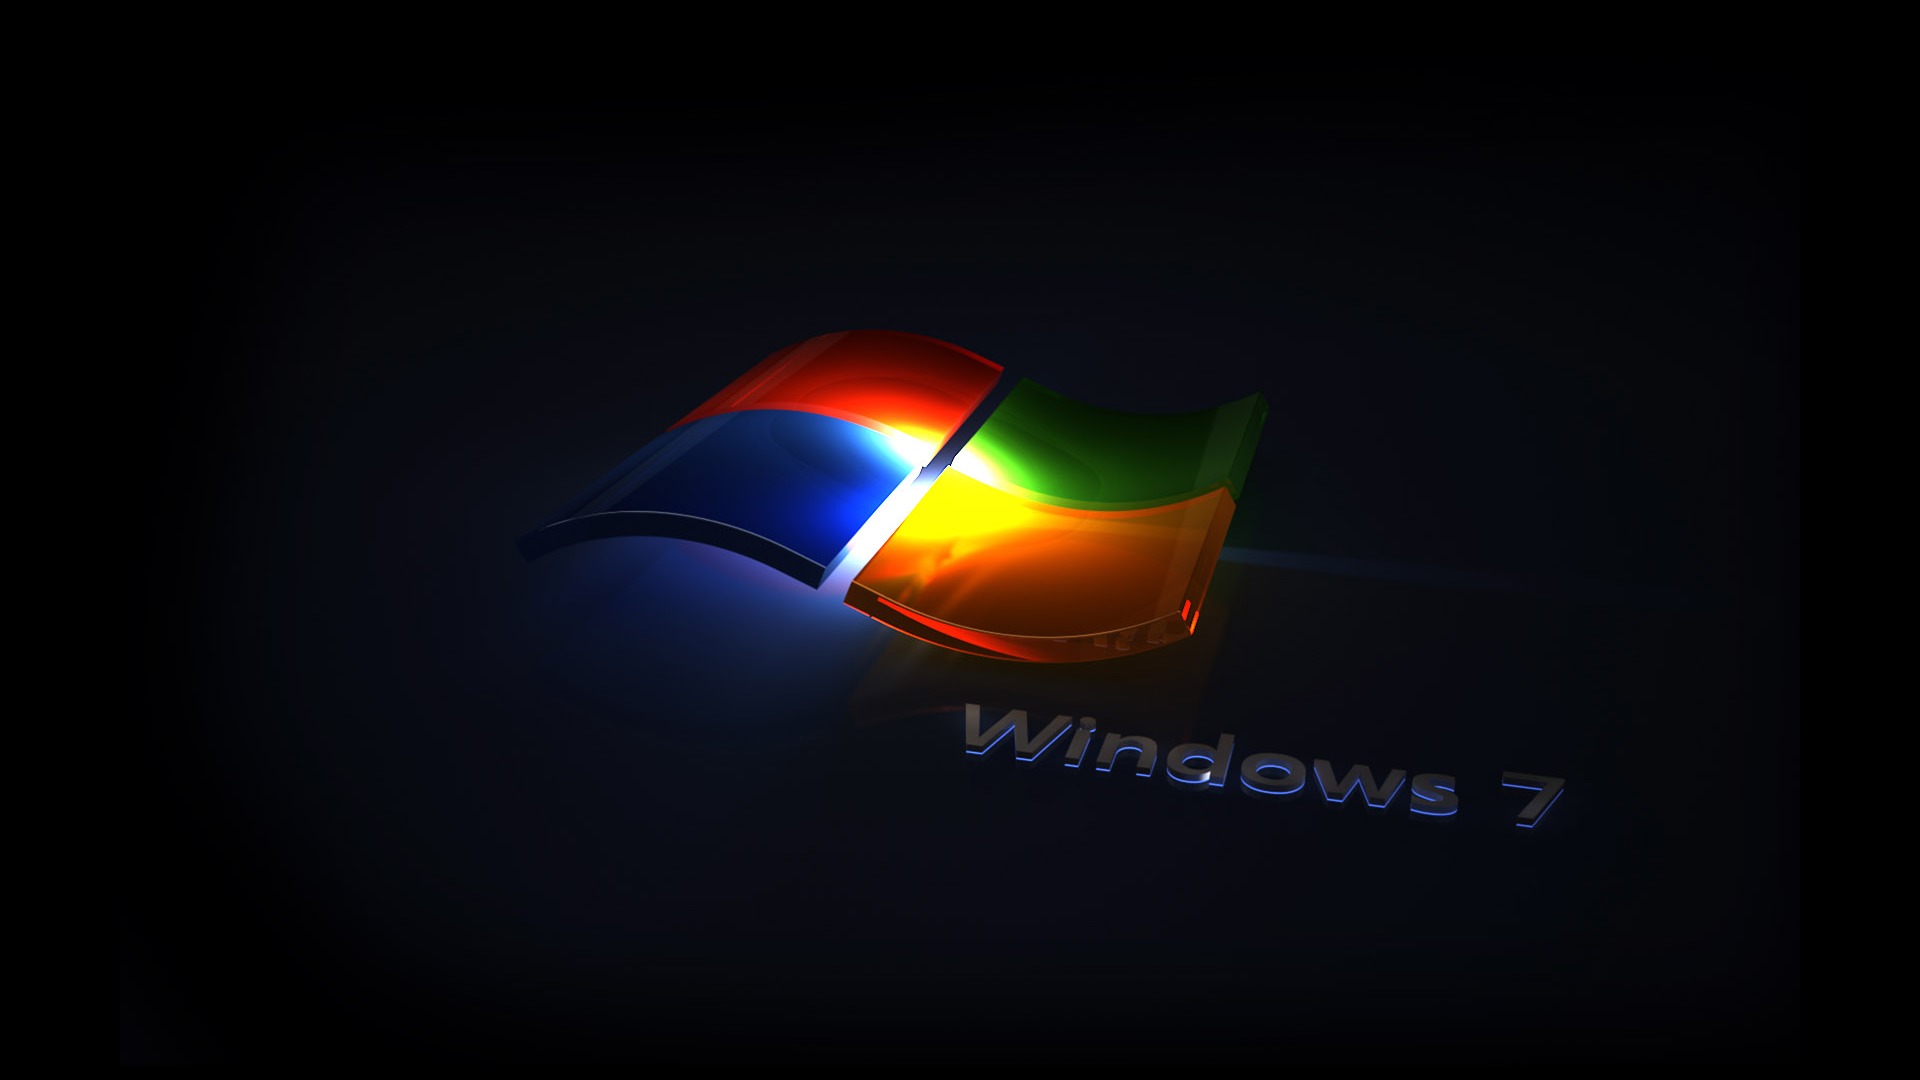 Windows7のテーマの壁紙 2 18 19x1080 壁紙ダウンロード Windows7のテーマの壁紙 2 システム 壁紙 V3の壁紙